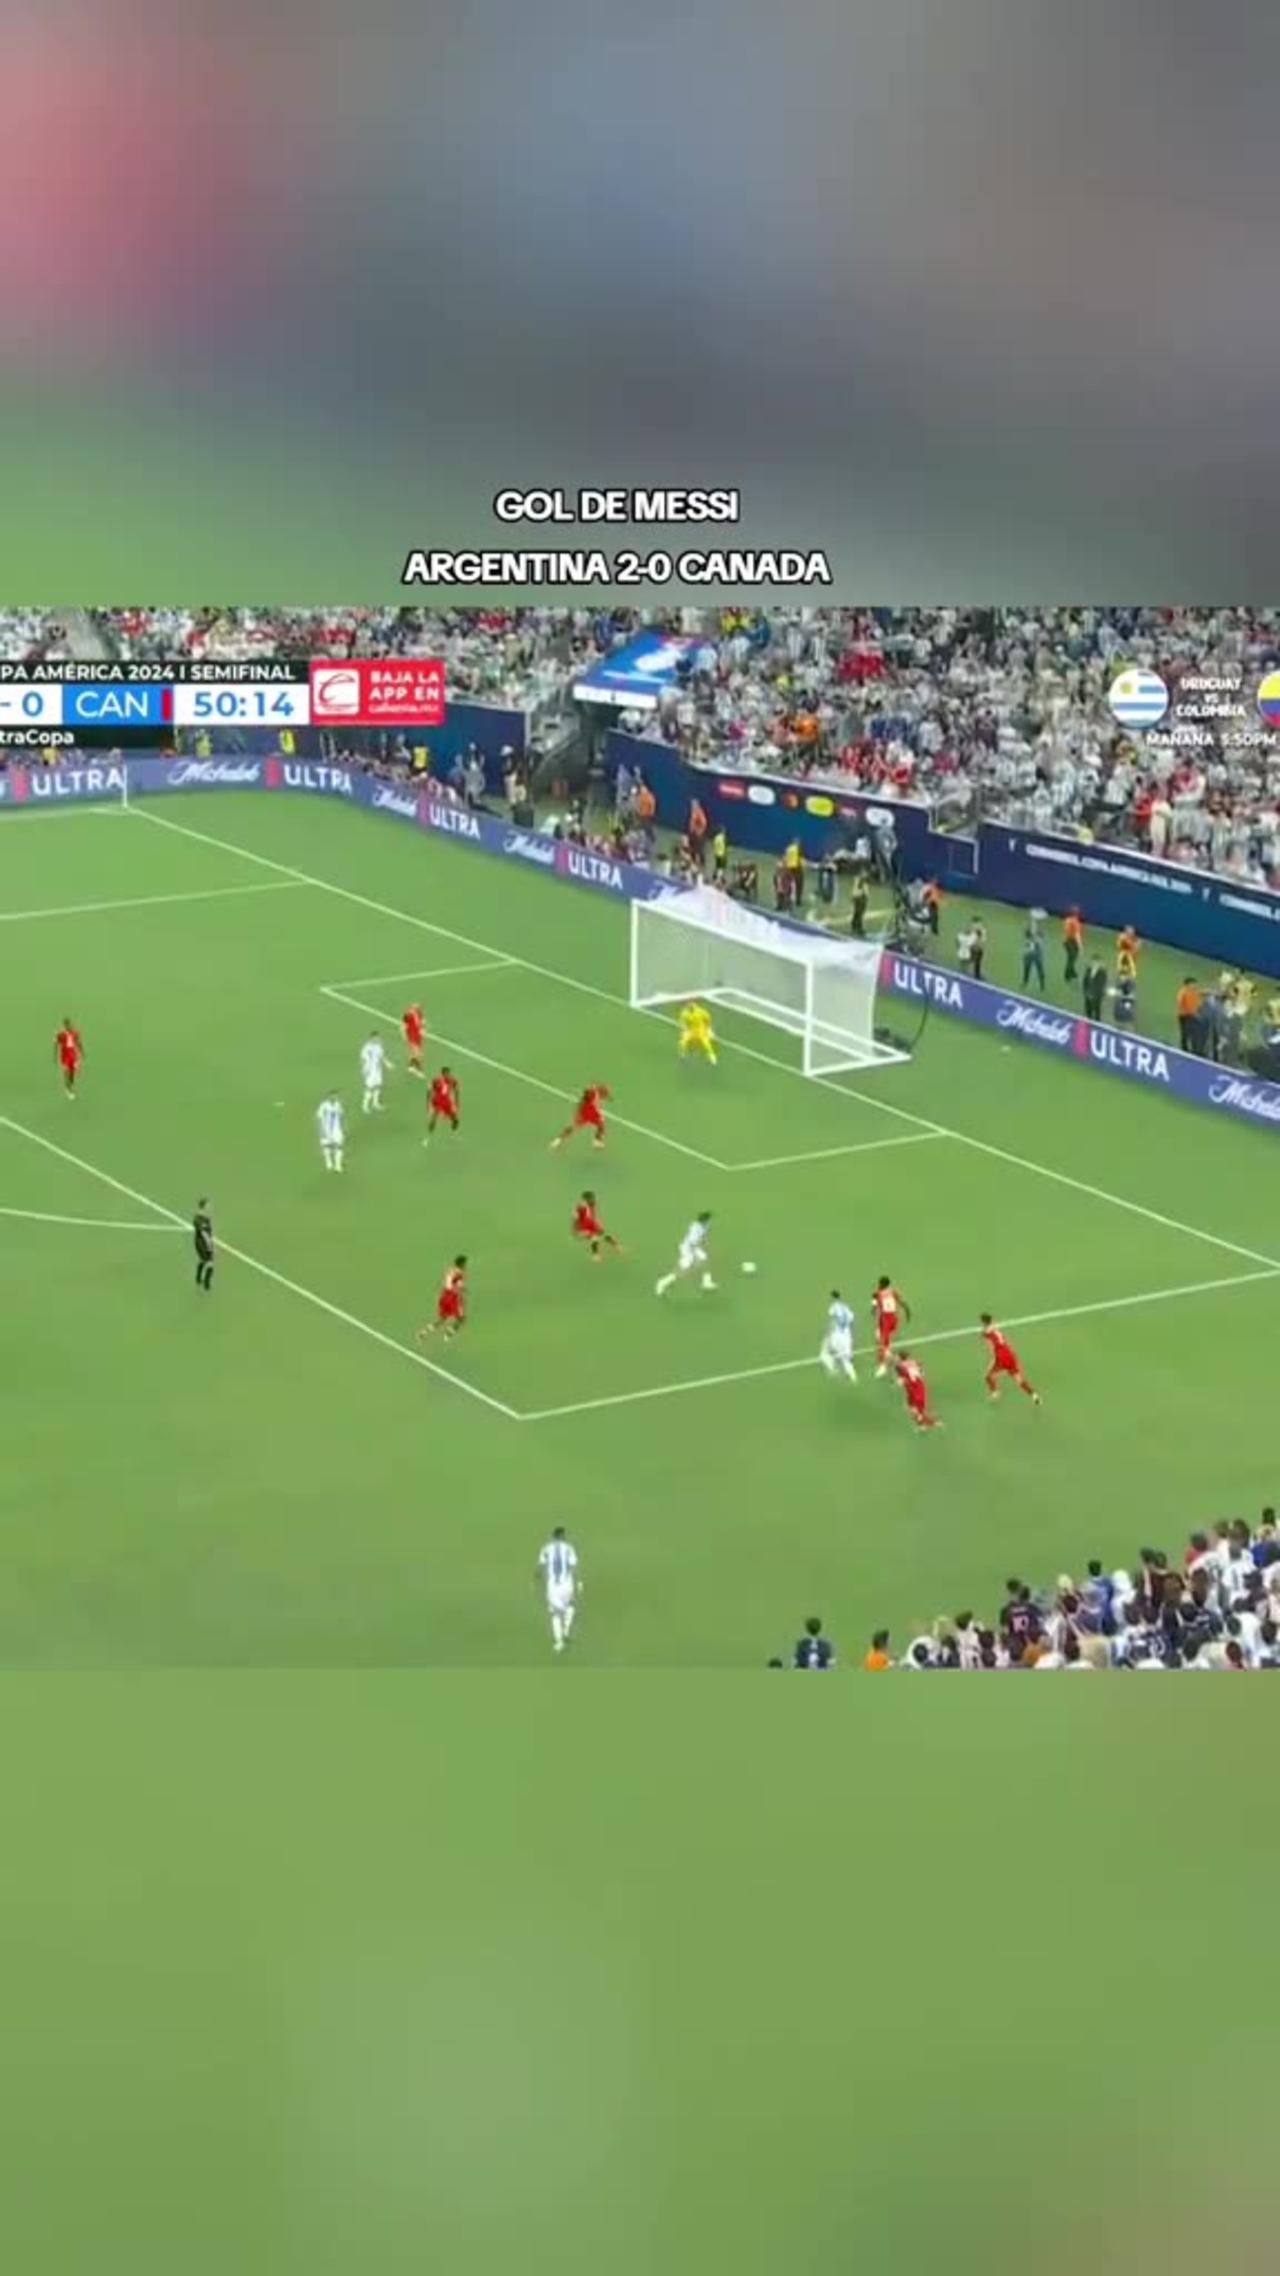 Lionel Messi scores goal, Argentina tops Canada to reach Copa America final